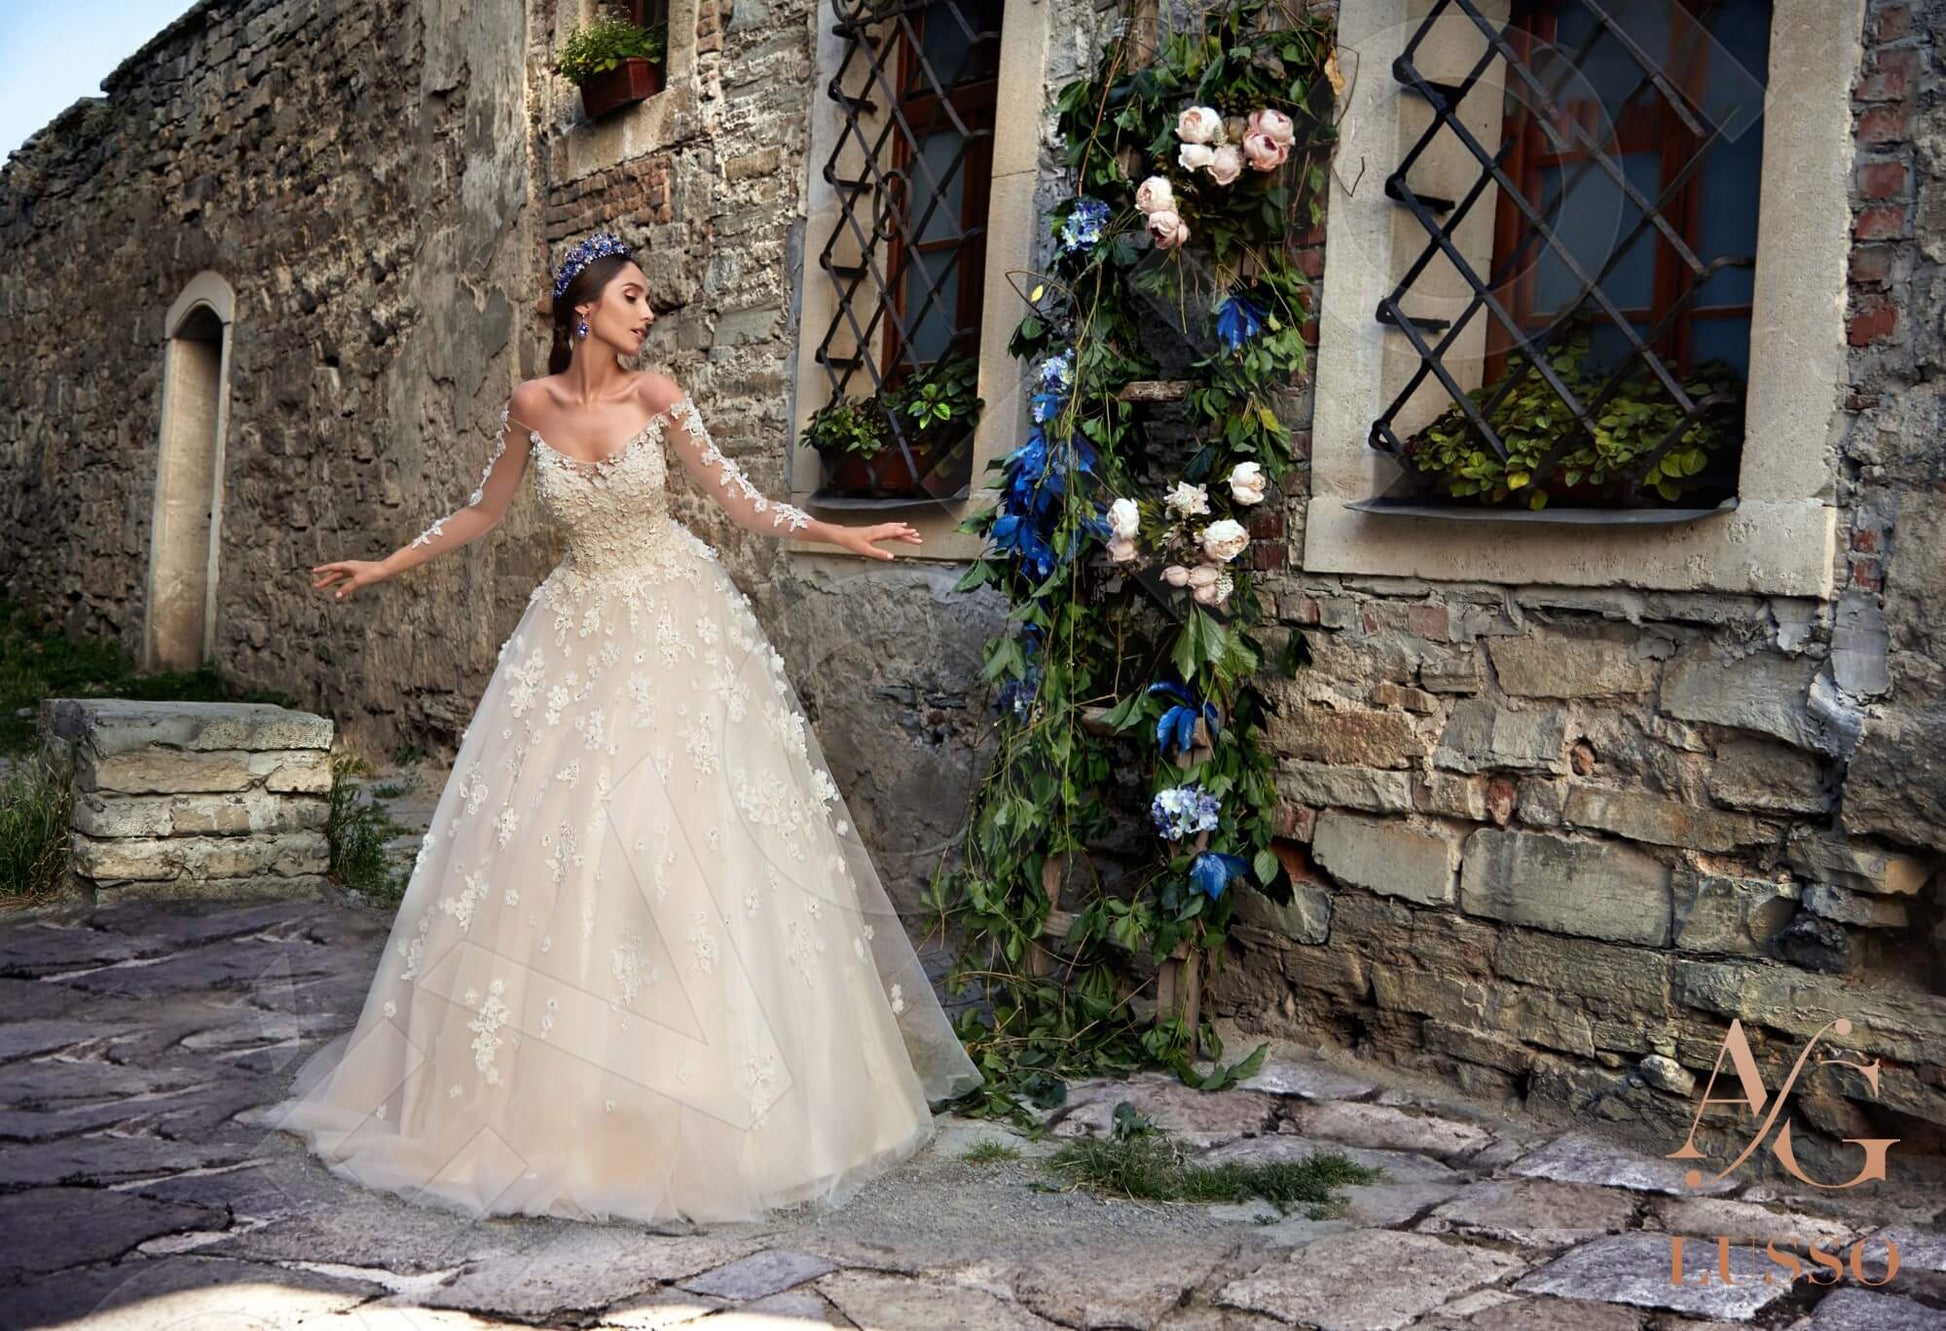 Letta Princess/Ball Gown Off-shoulder/Drop shoulders White Wedding dress